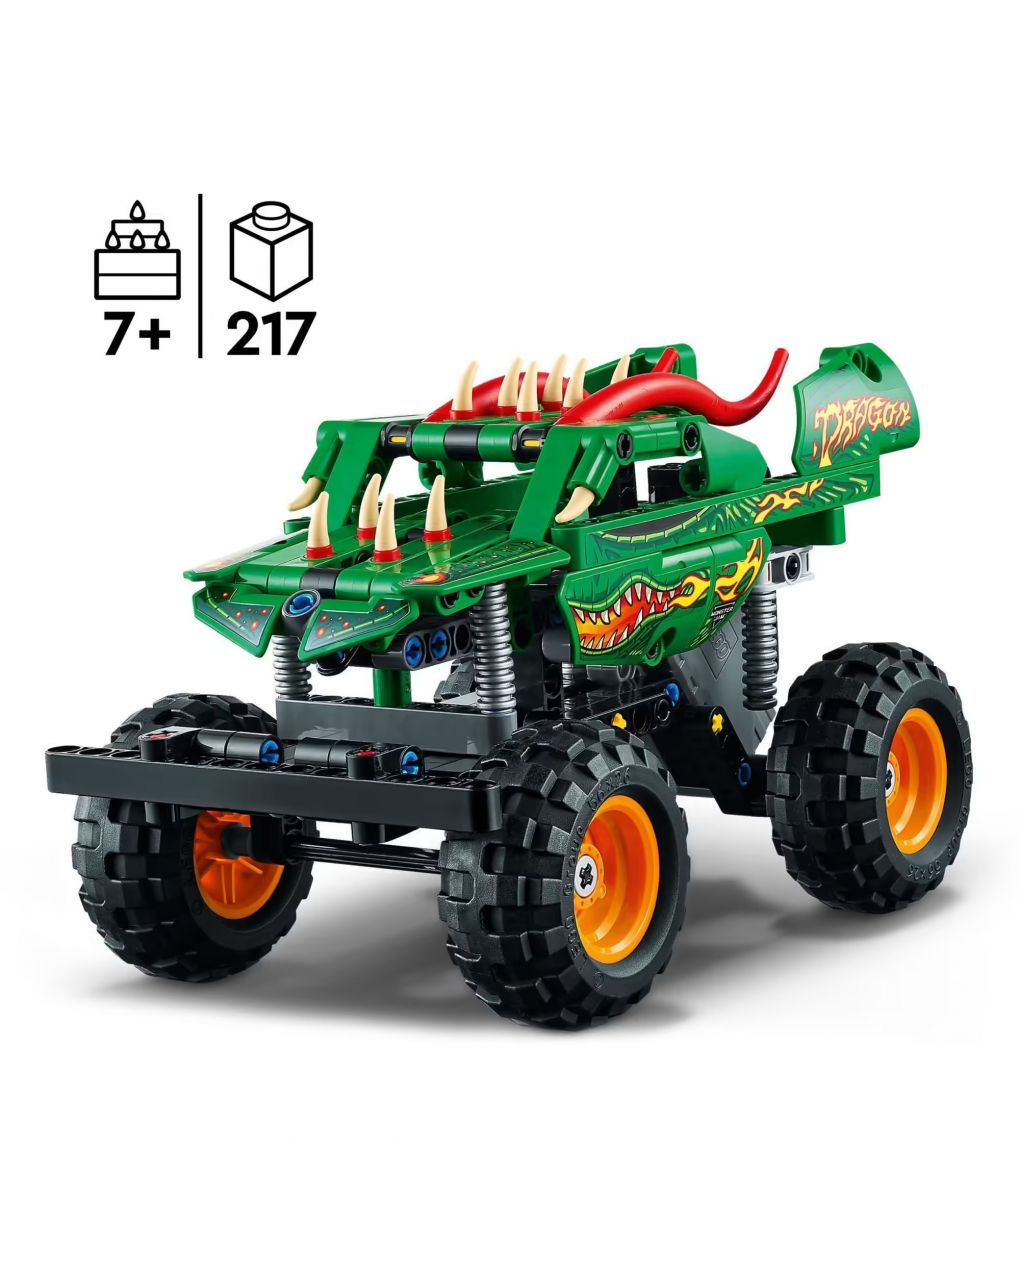 Monster jam dragon - set 2 in 1 con pull-back - auto offroad monster truck e macchina giocattolo buggy - lego technic